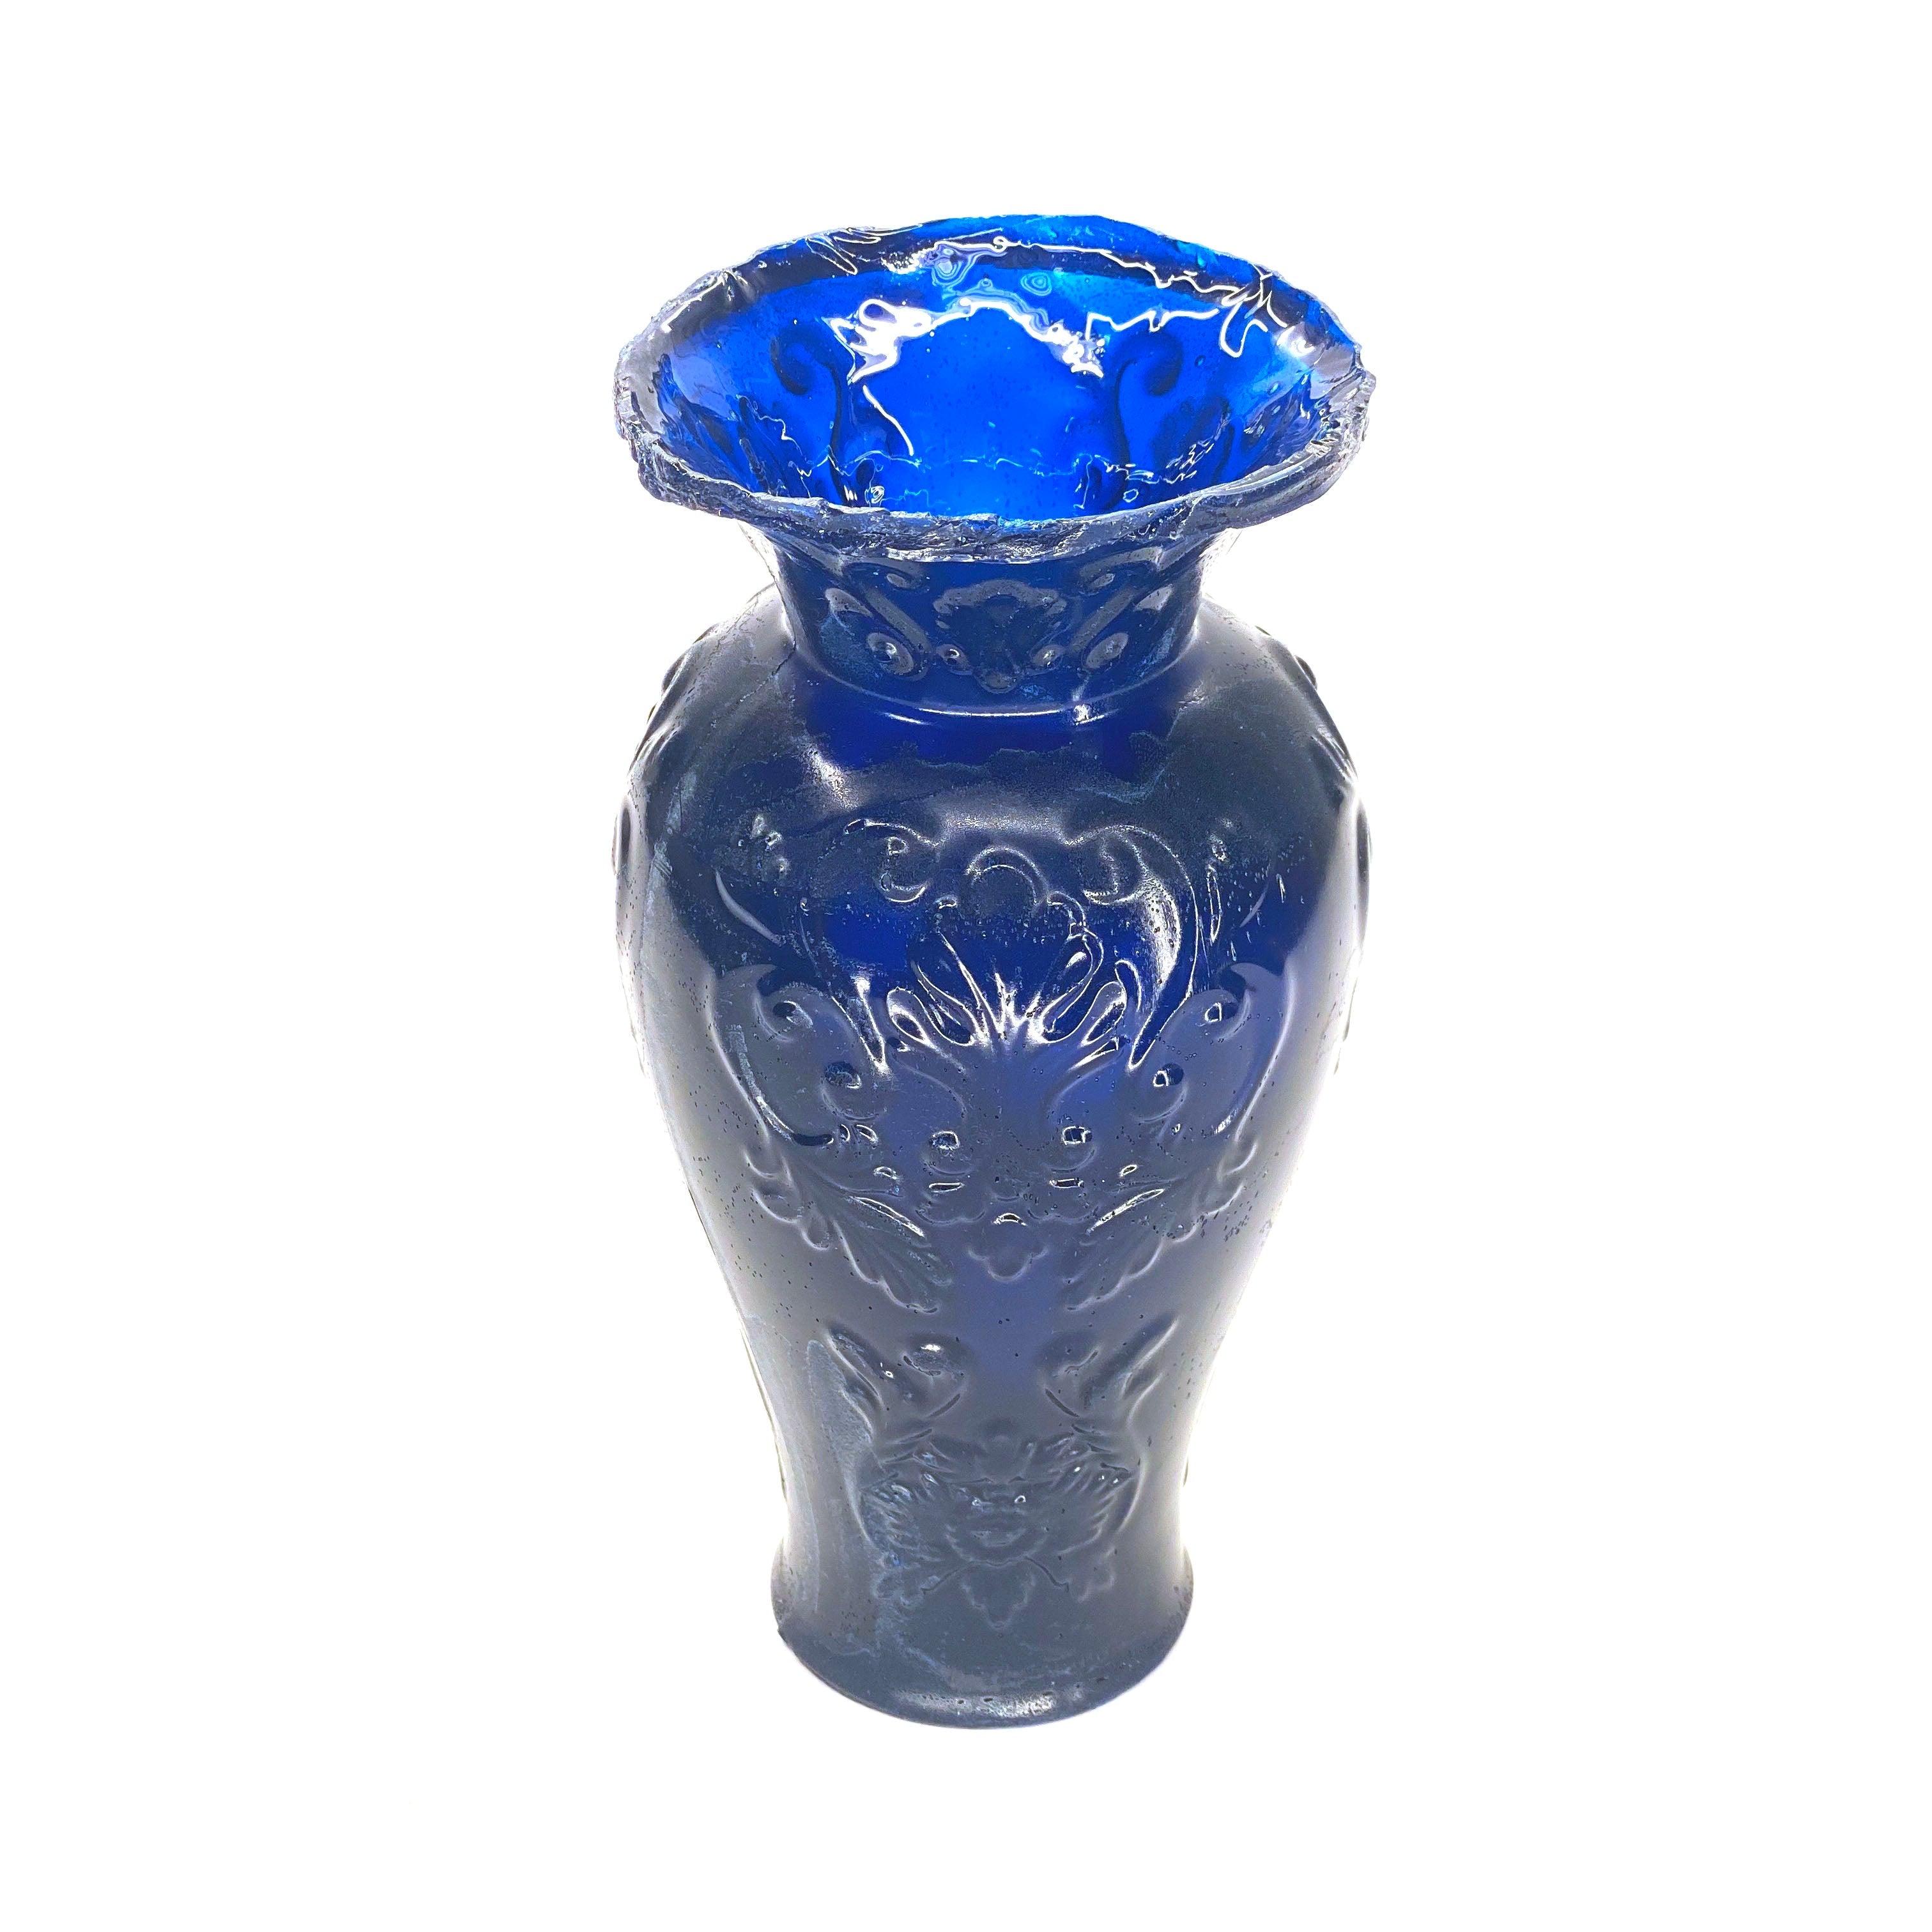 SMASHProps Breakaway Extra Large Georgian Vase 16 Inch - Cobalt Blue Translucent